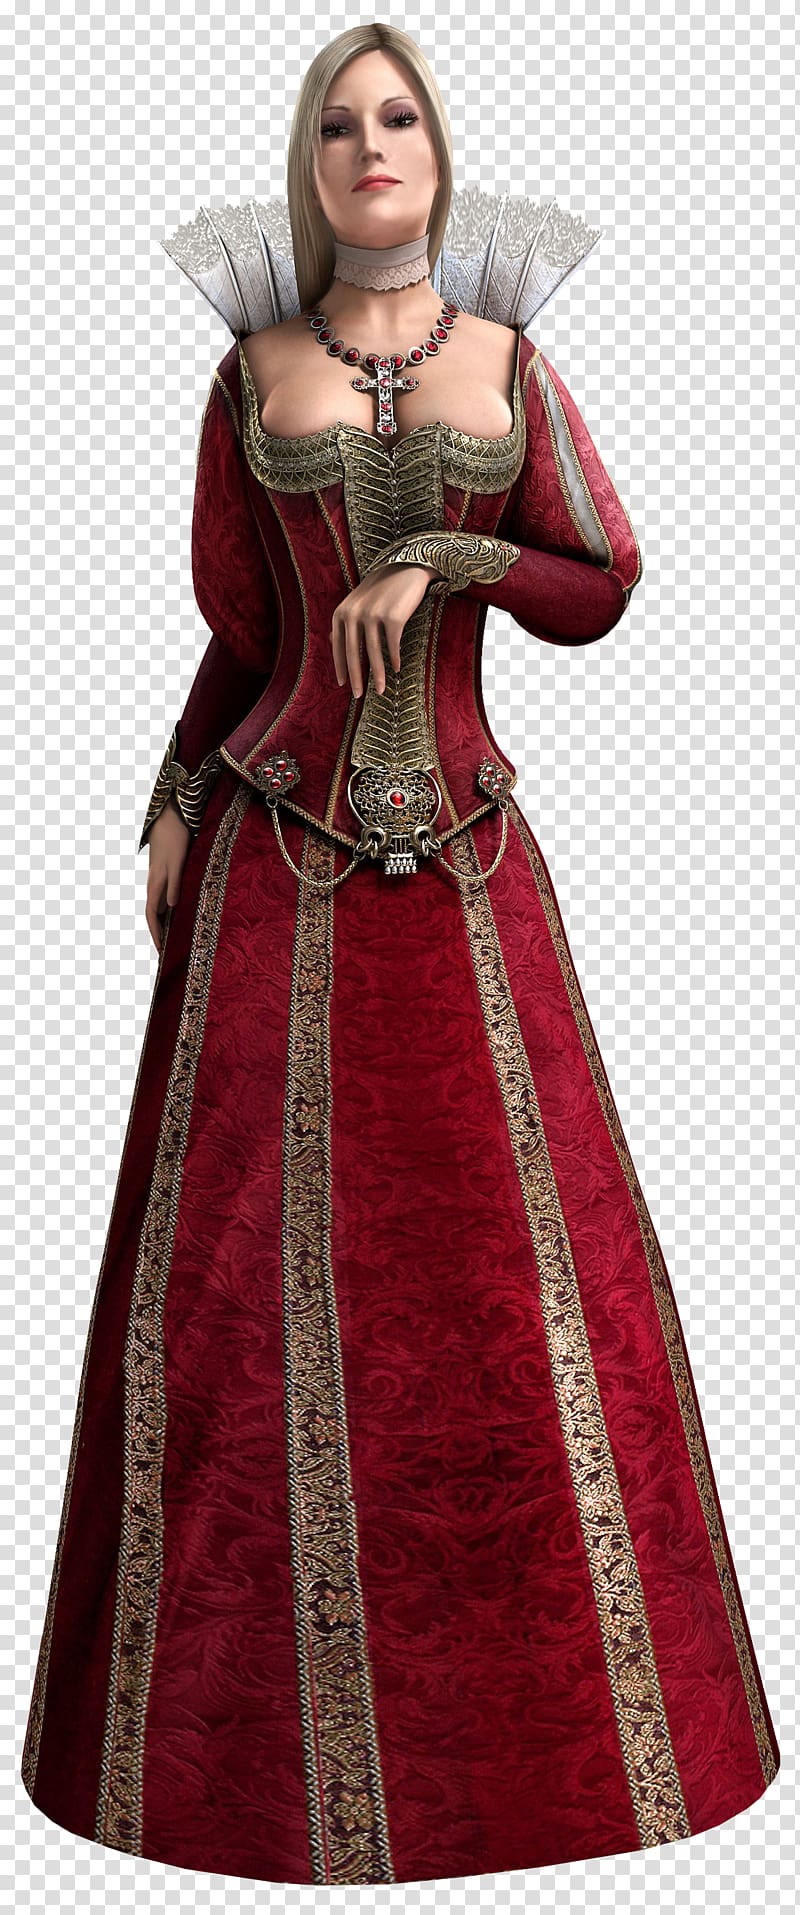 Lucrezia Borgia Assassin\'s Creed: Brotherhood Assassin\'s Creed II Ezio Auditore The Borgias, younger sister transparent background PNG clipart